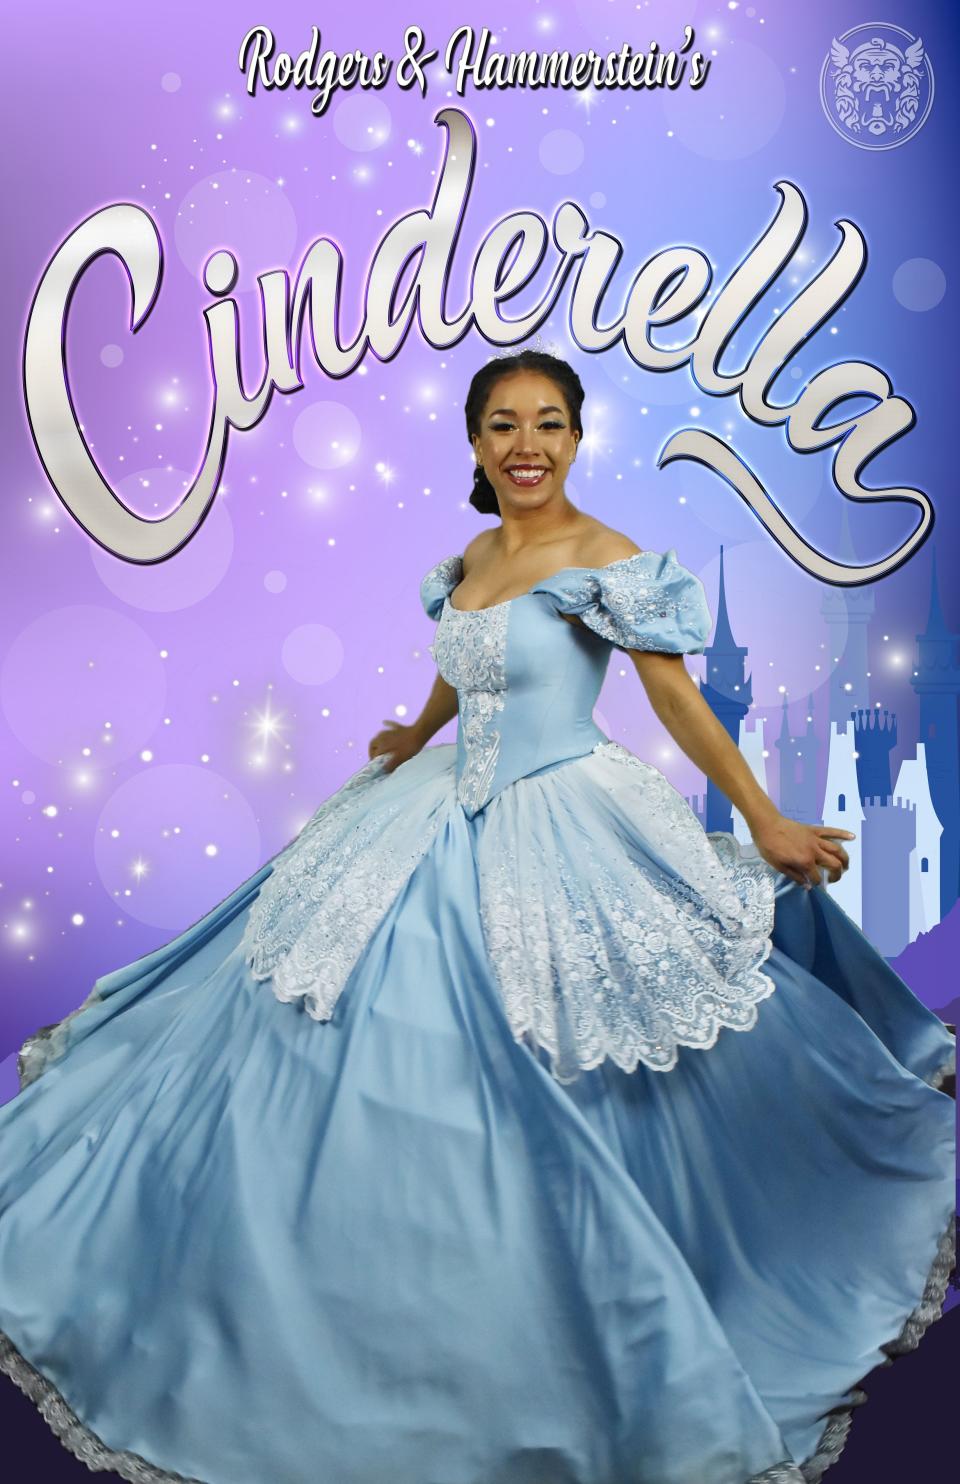 Imari Stout in gown for "Cinderella" promo